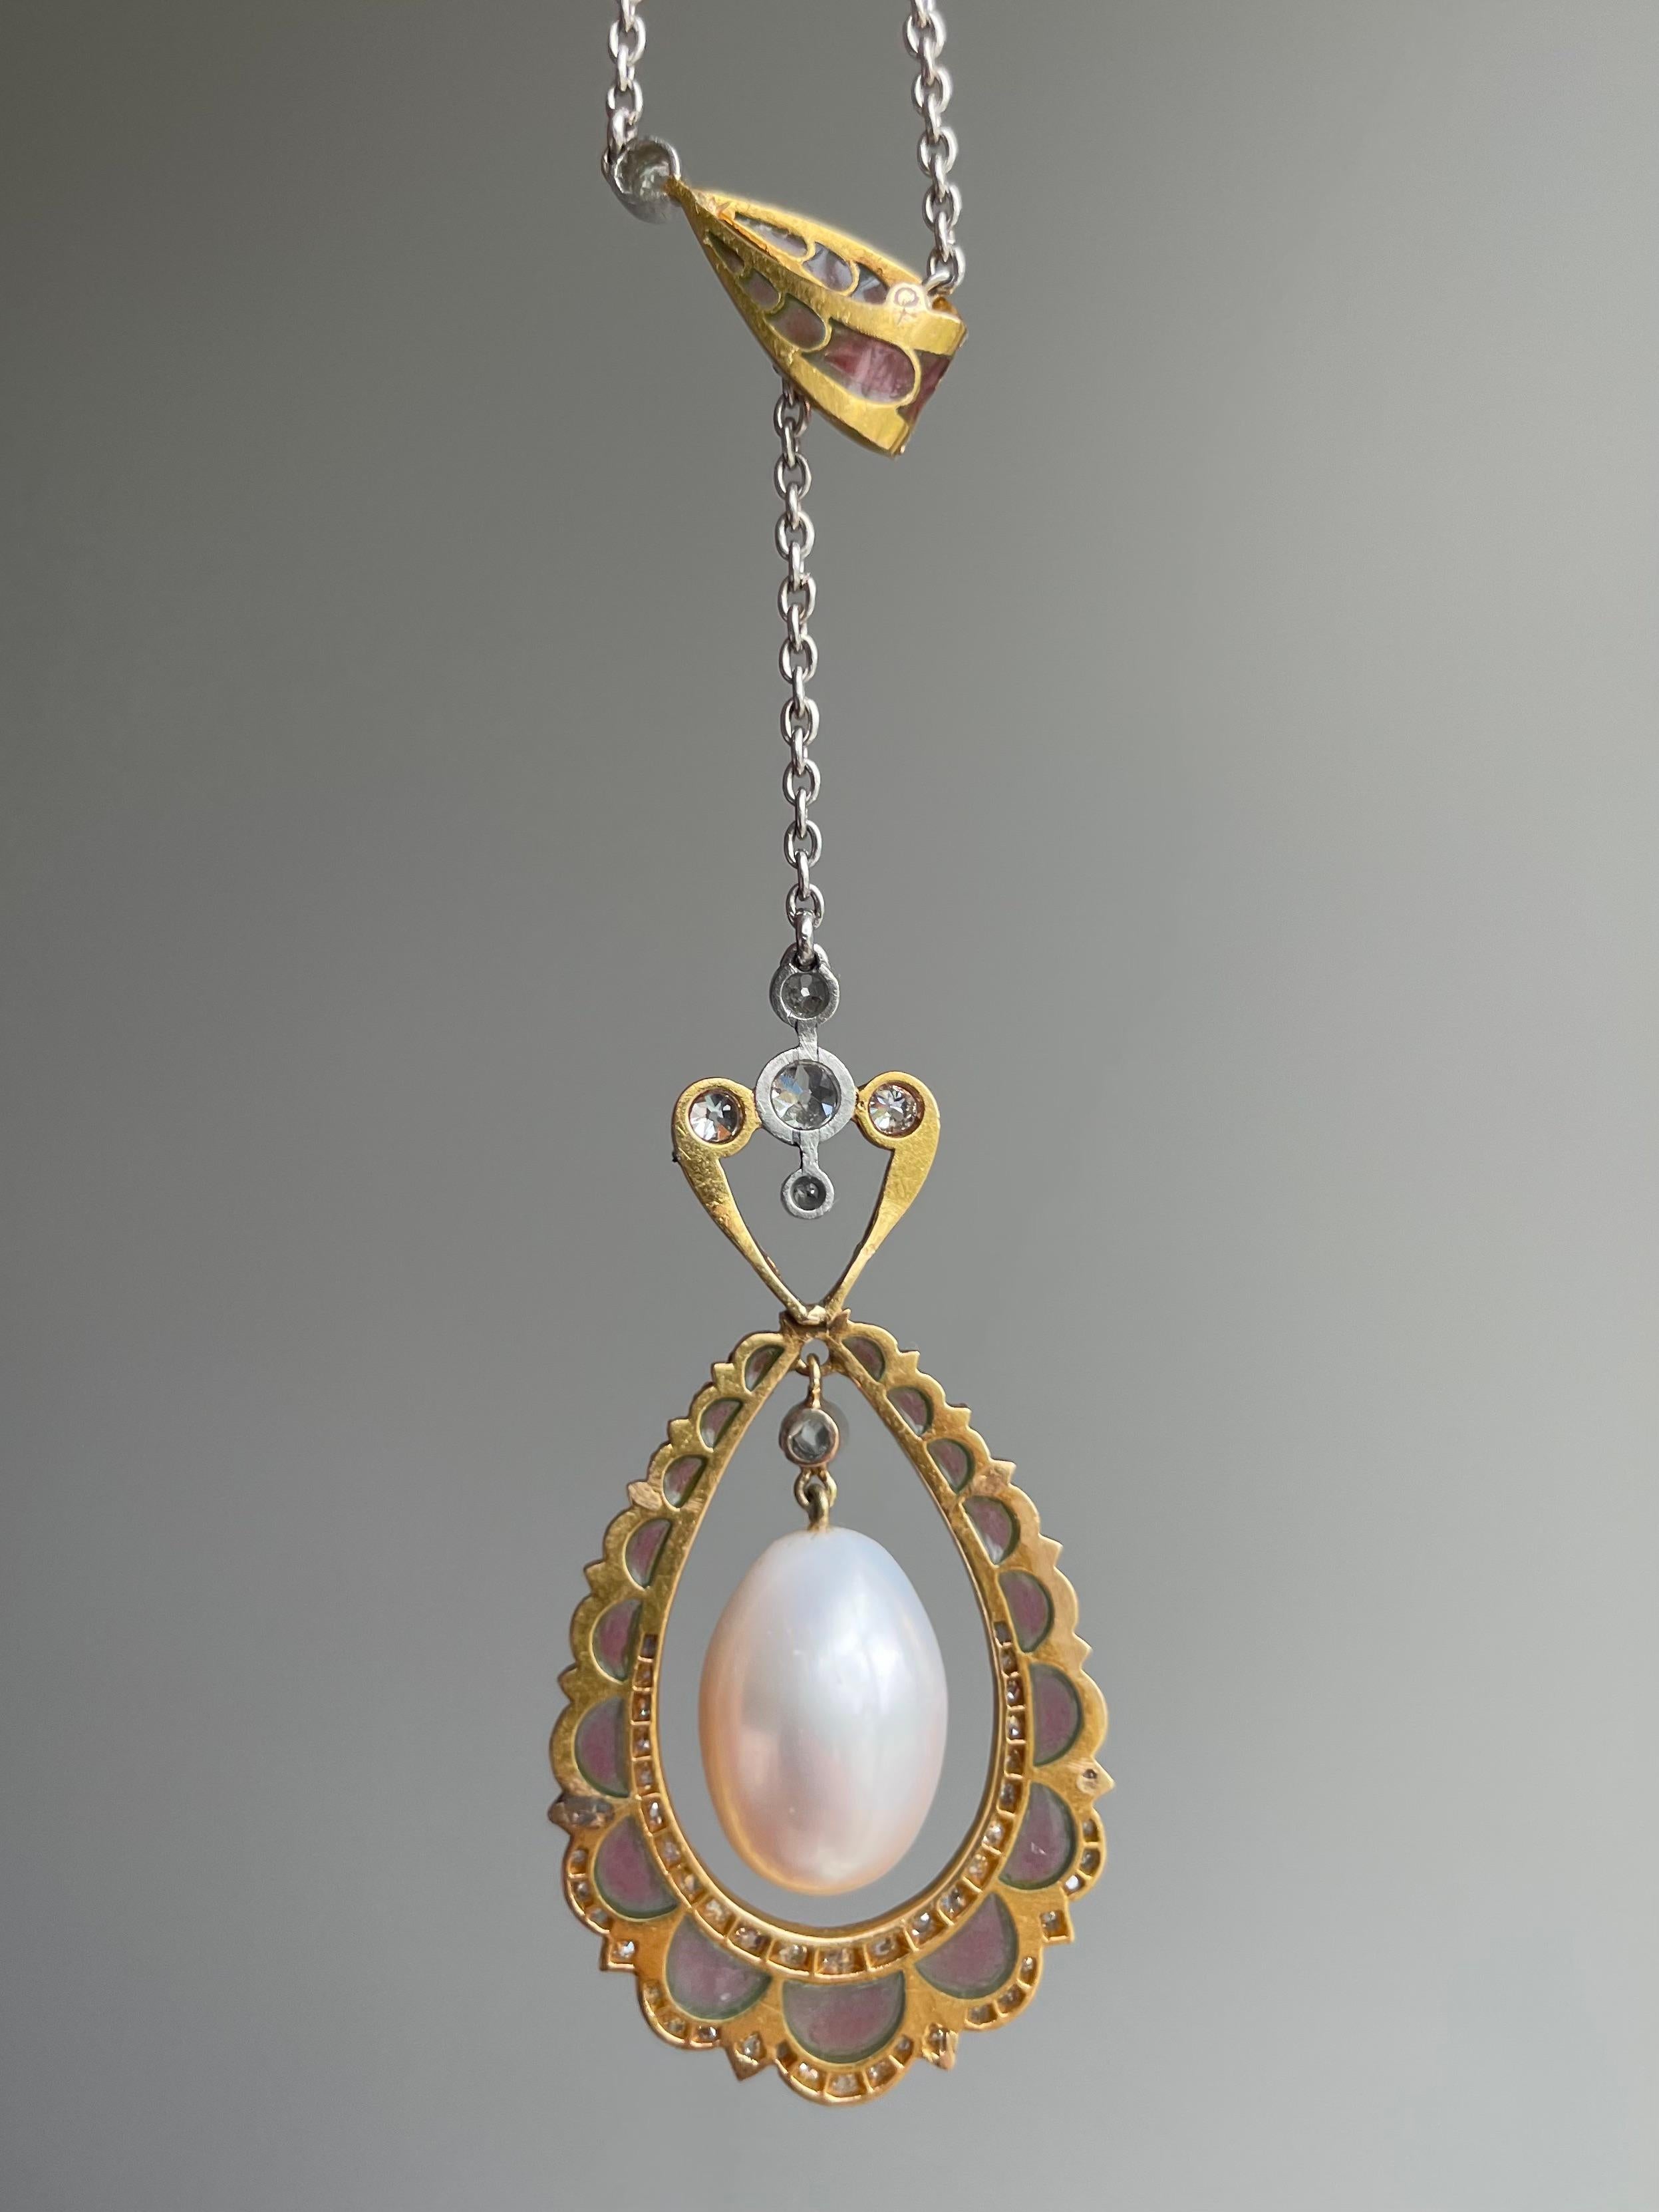 French Art Nouveau Plique-a-Jour Lavaliere Necklace In Good Condition For Sale In Hummelstown, PA